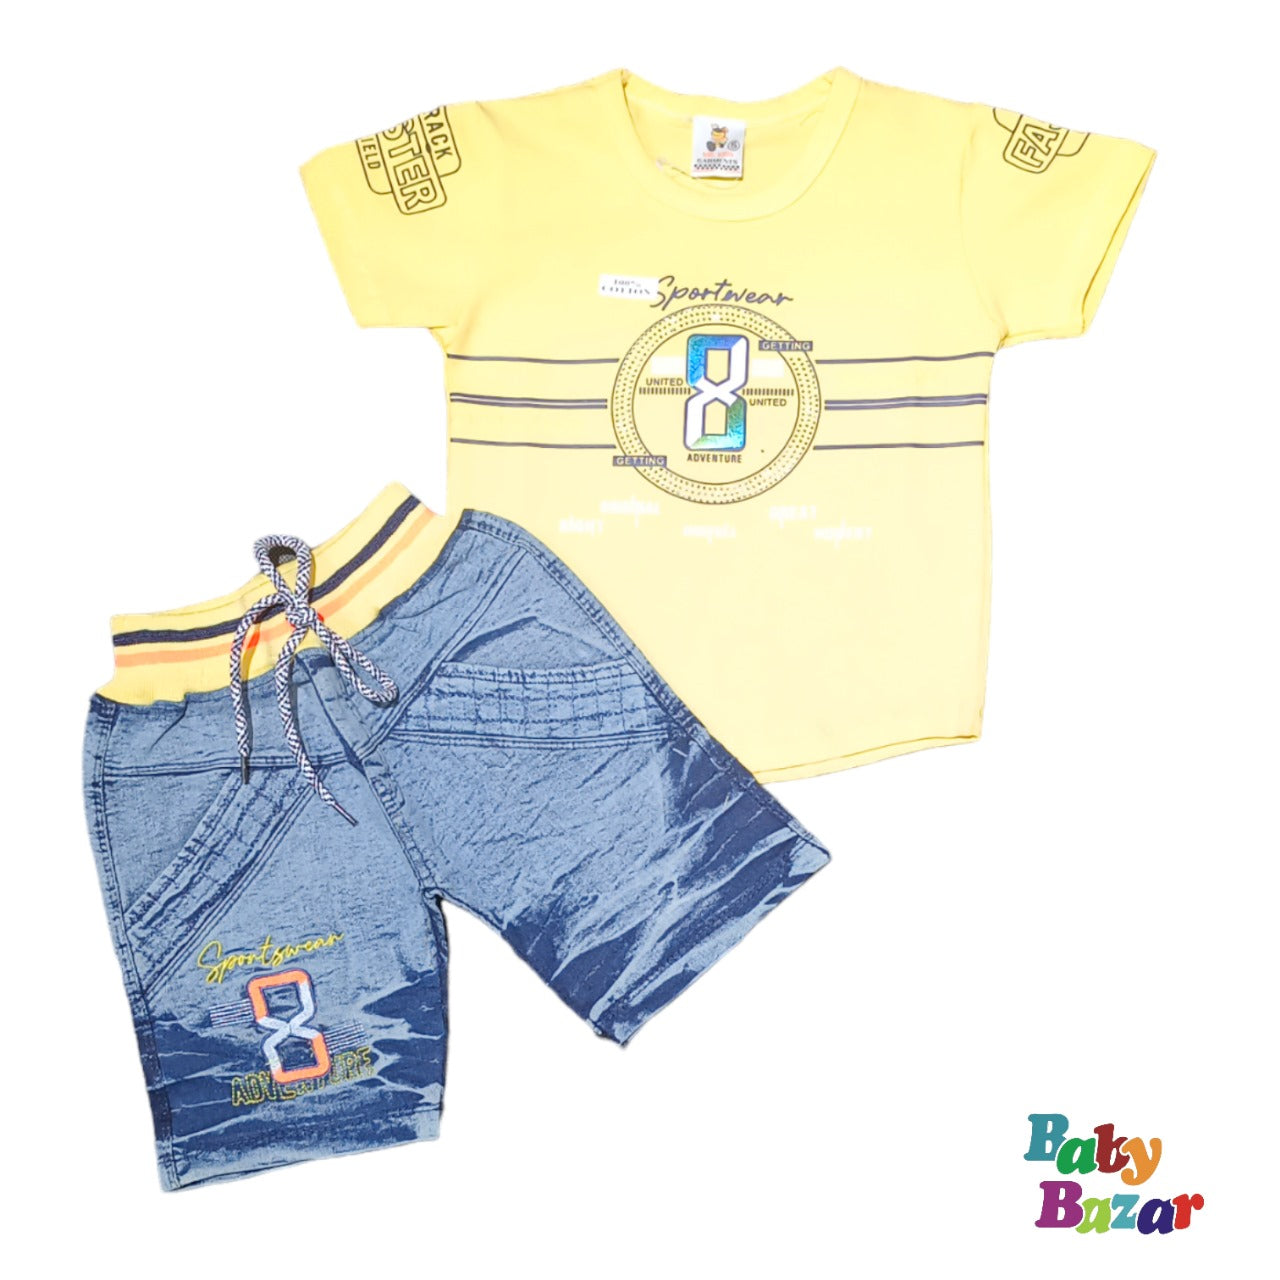 Classic Nicker Shirt For Baby Boy - Light Yellow